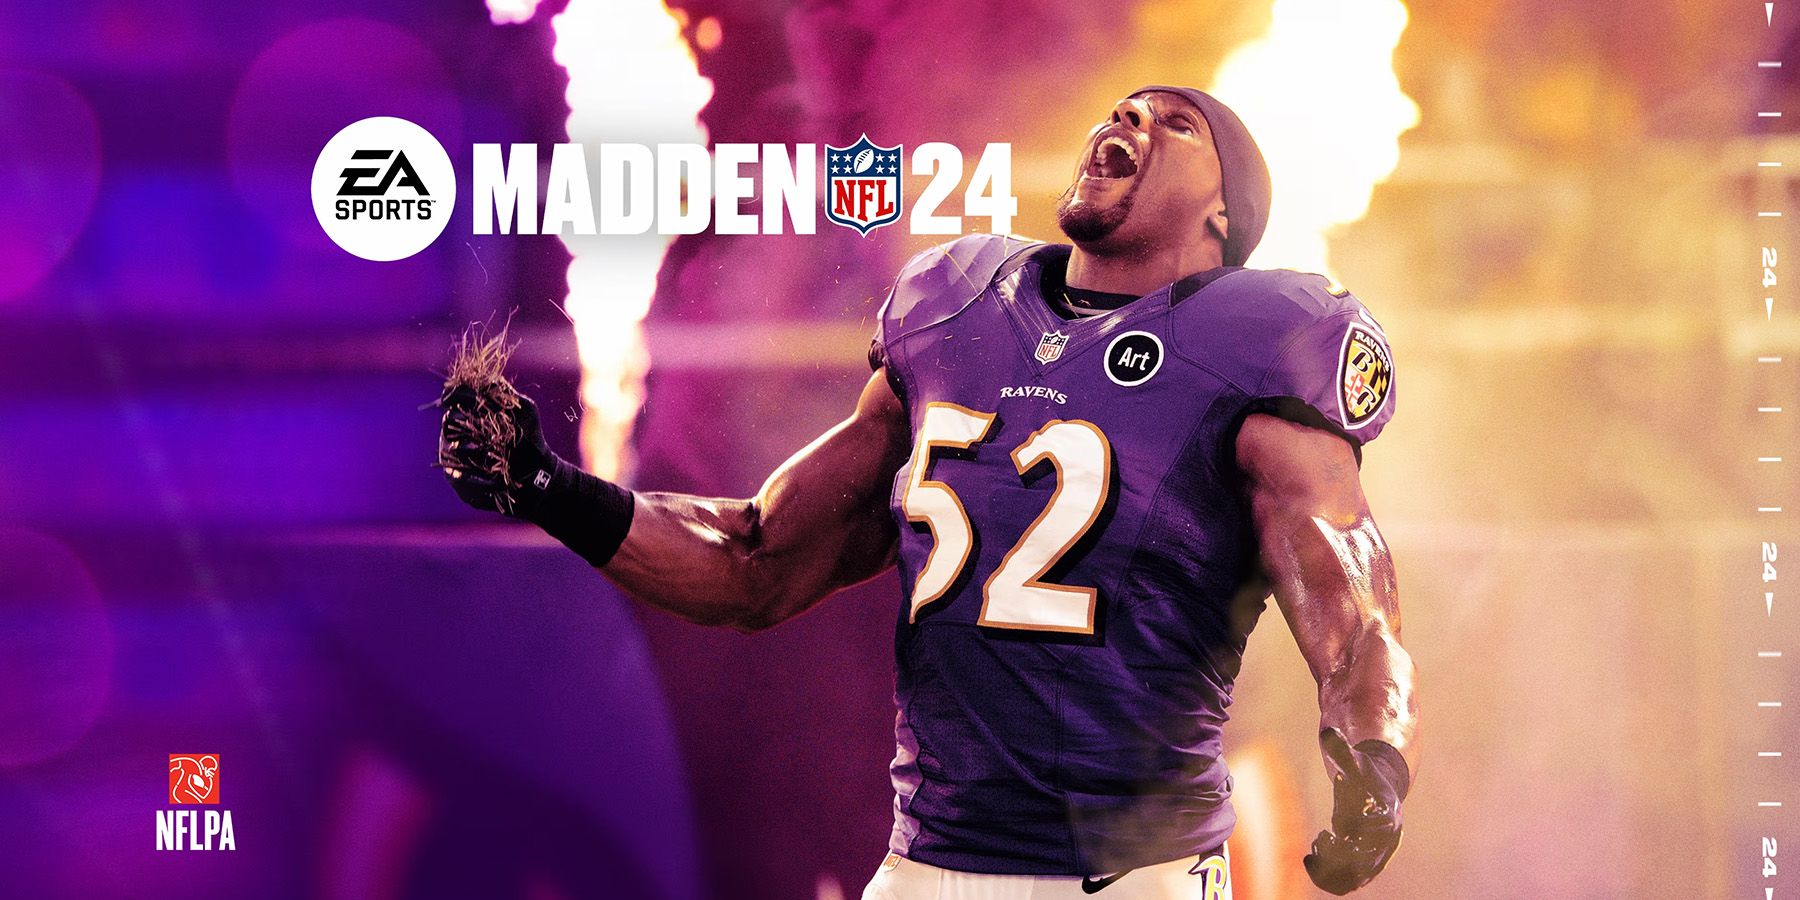 Madden NFL 24 NFLPA EA Play page purple key art